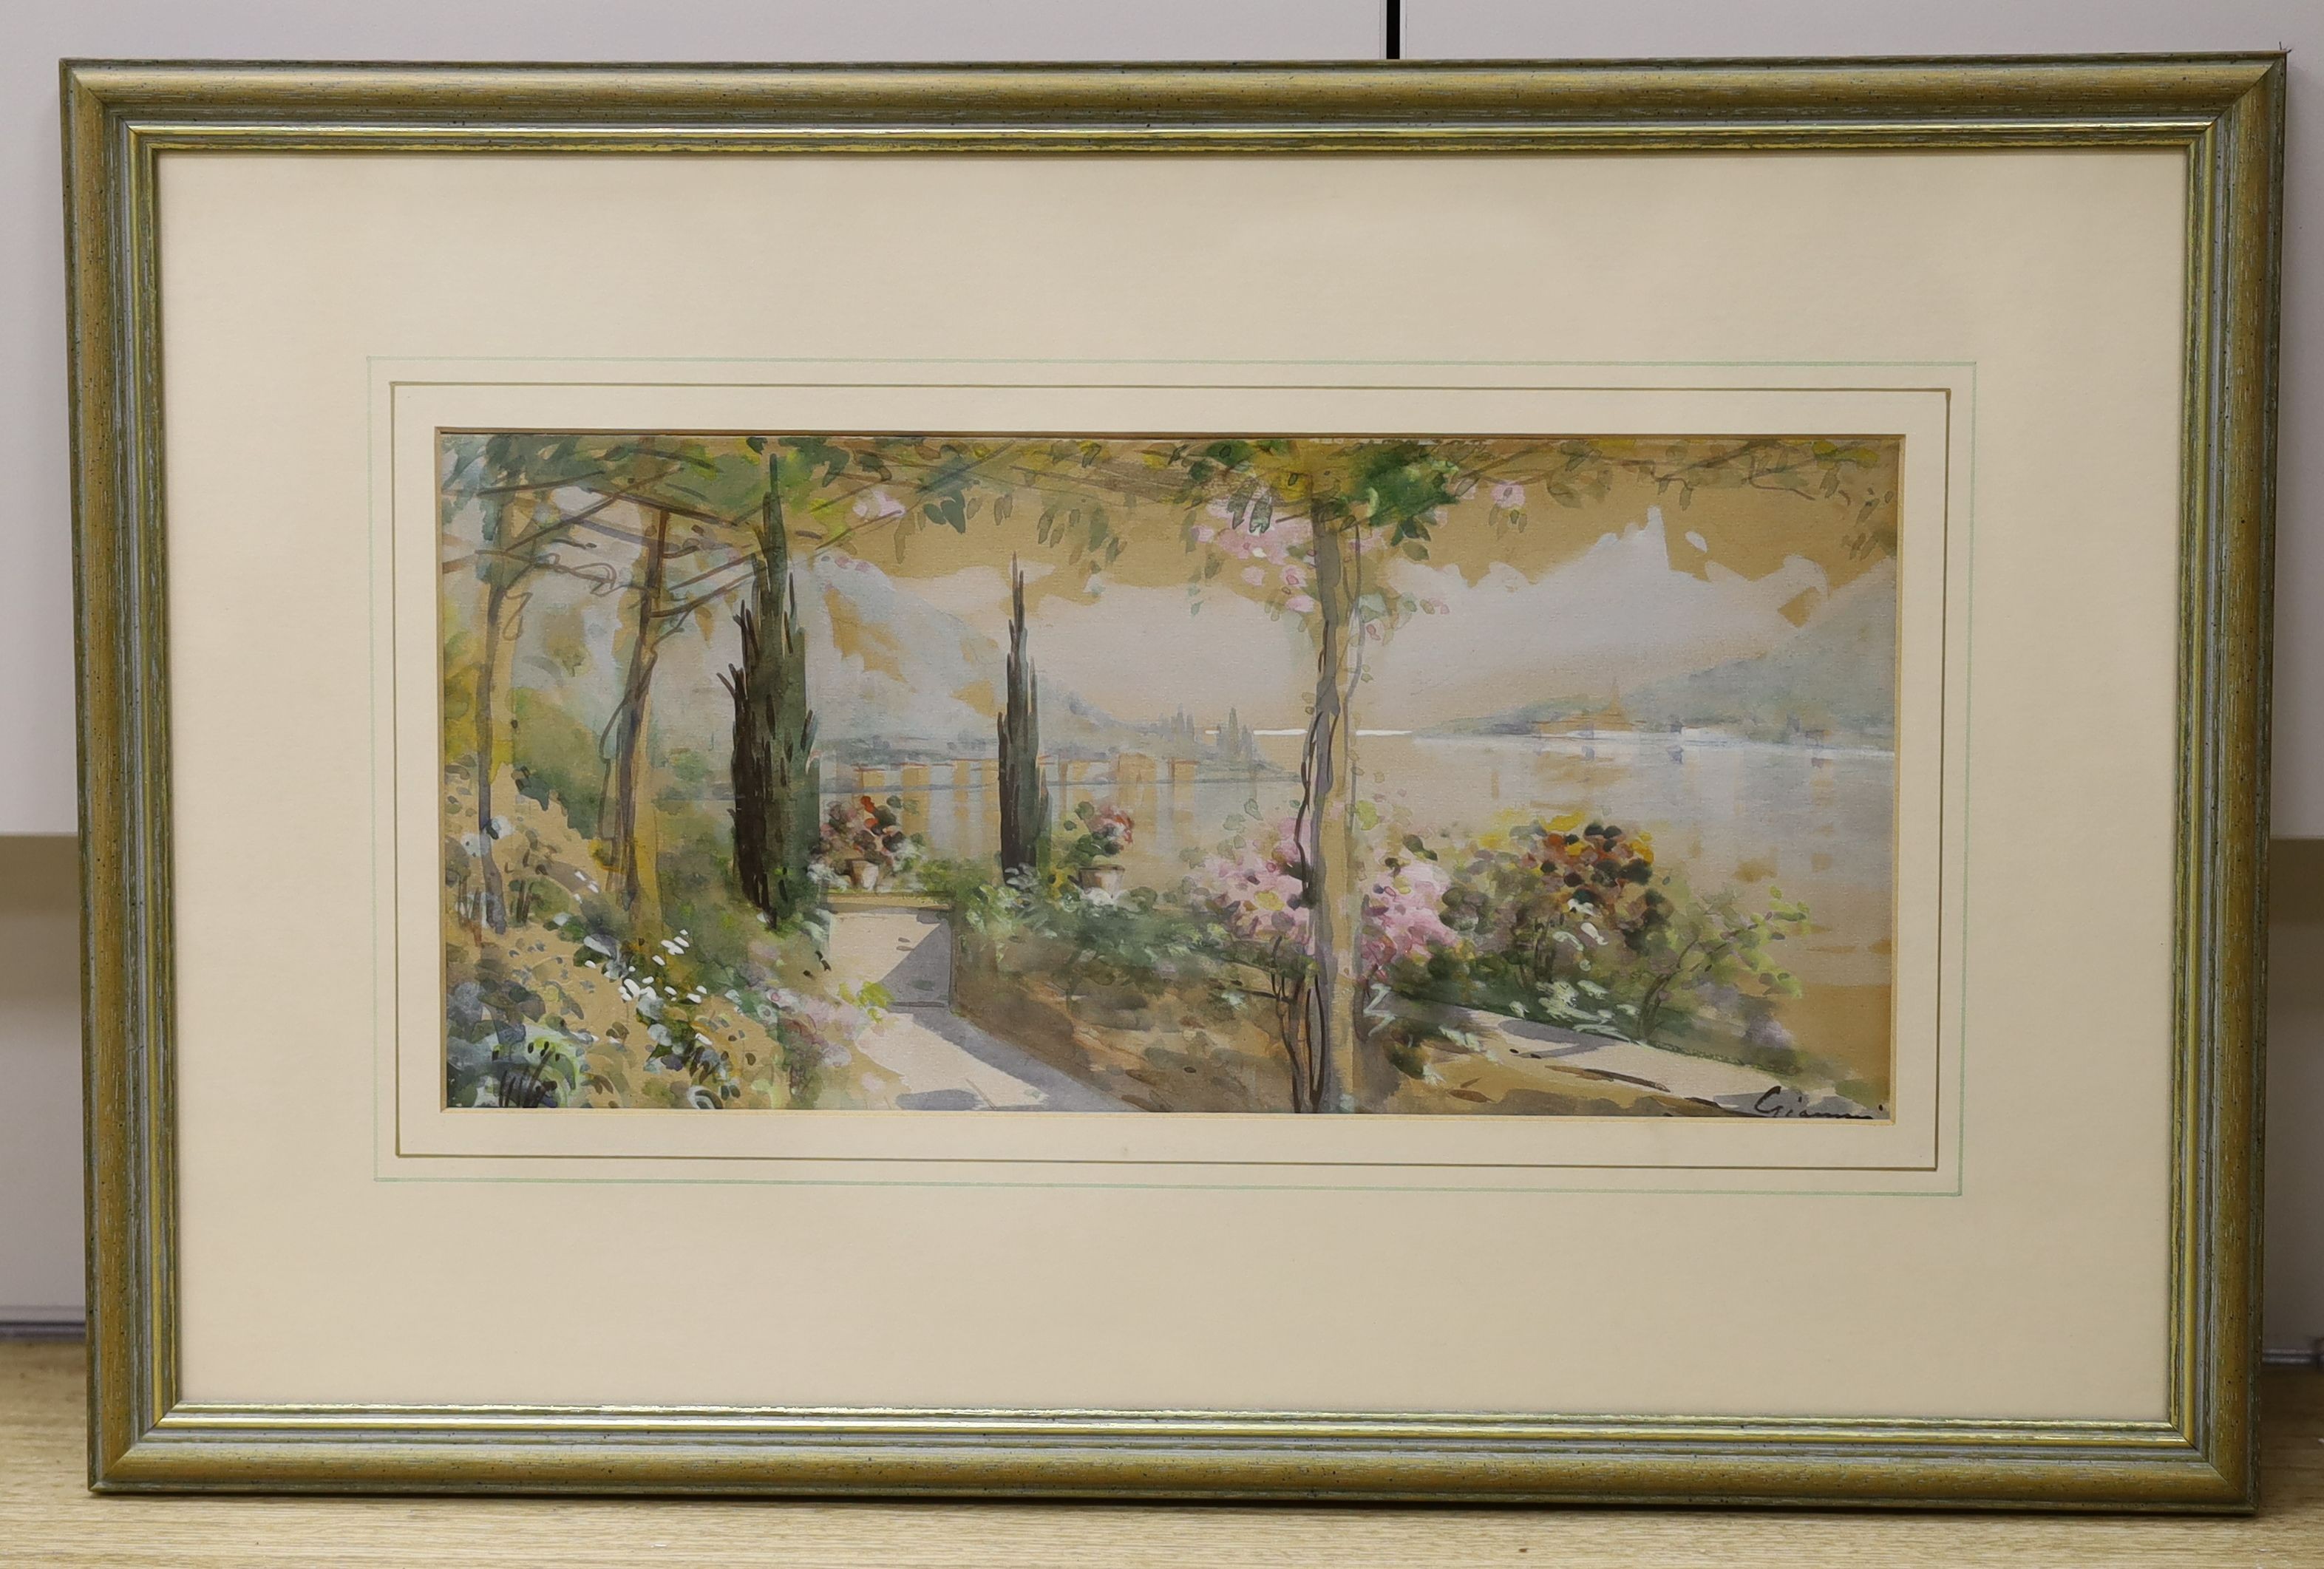 Gianni, watercolour, Terrace overlooking an Italian lake, signed, 16 x 34cm